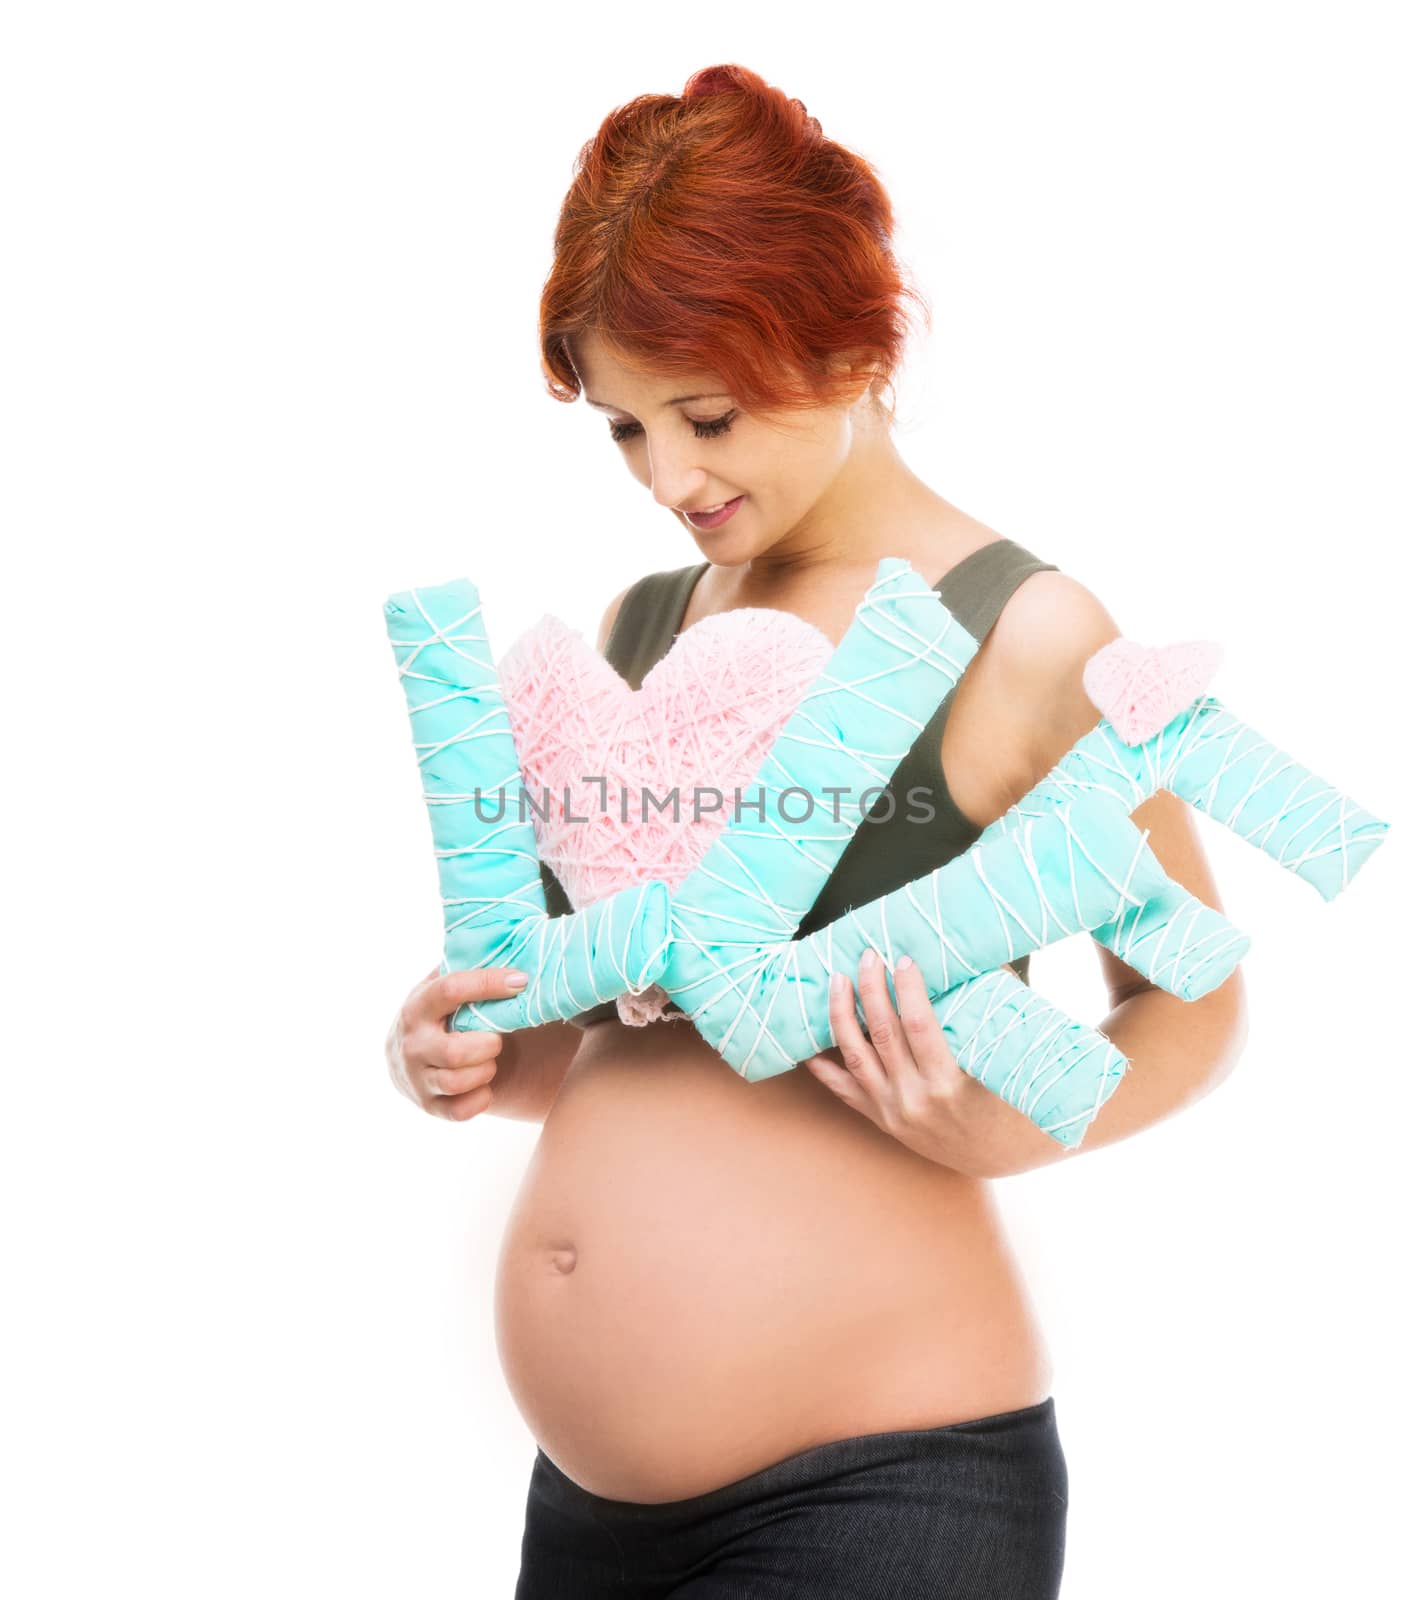 redhead pregnant woman holding an inscription love by GekaSkr